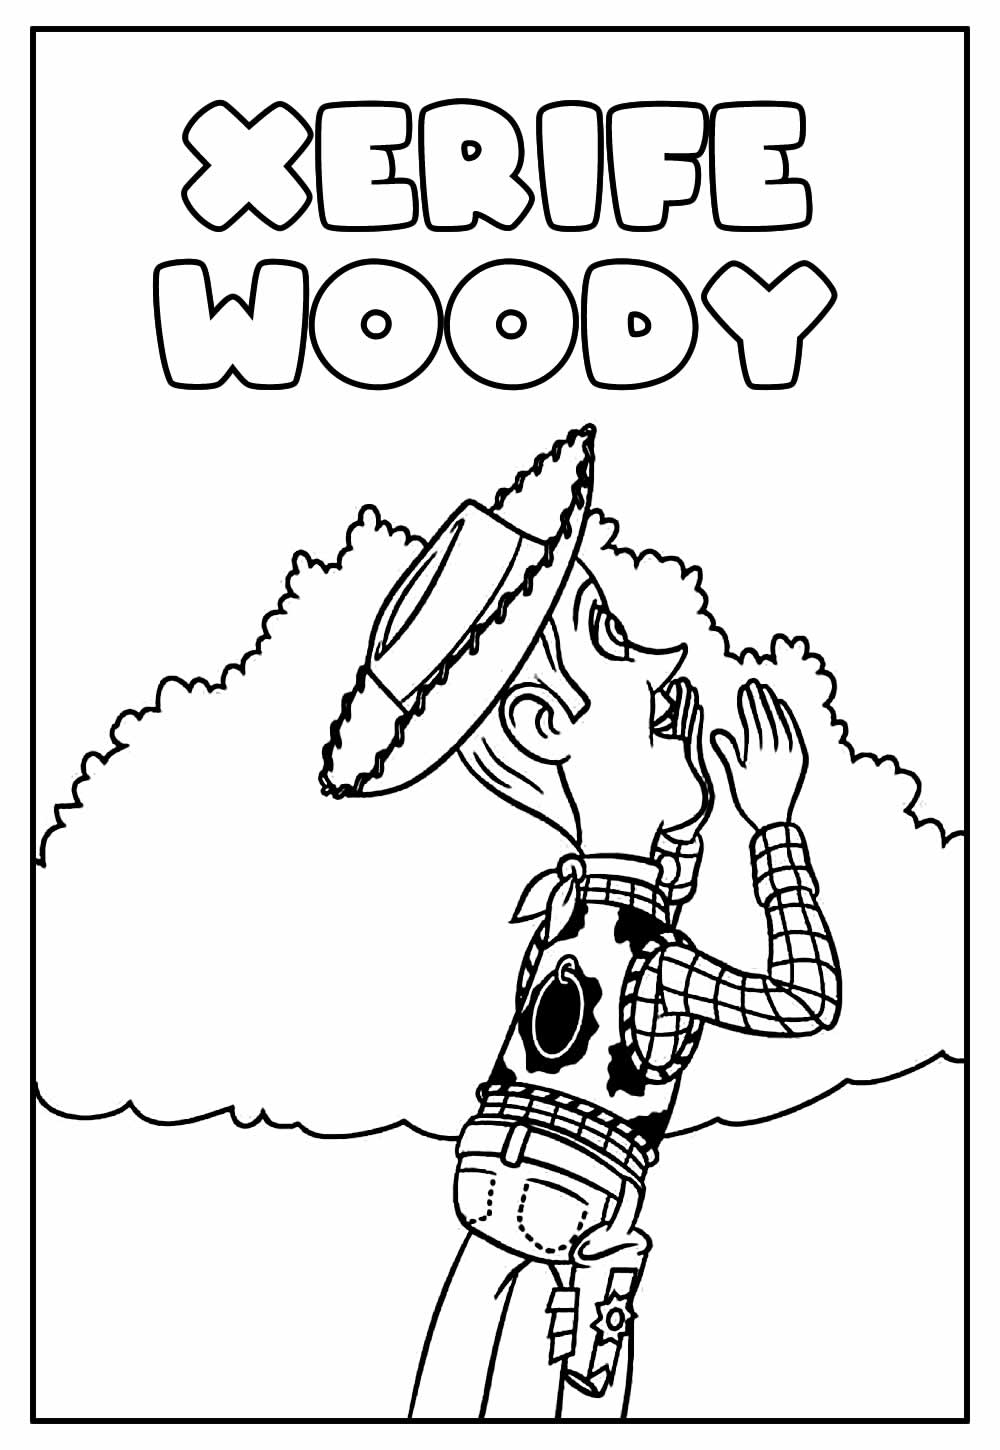 Desenho Educativo para colorir do Xerife Woody